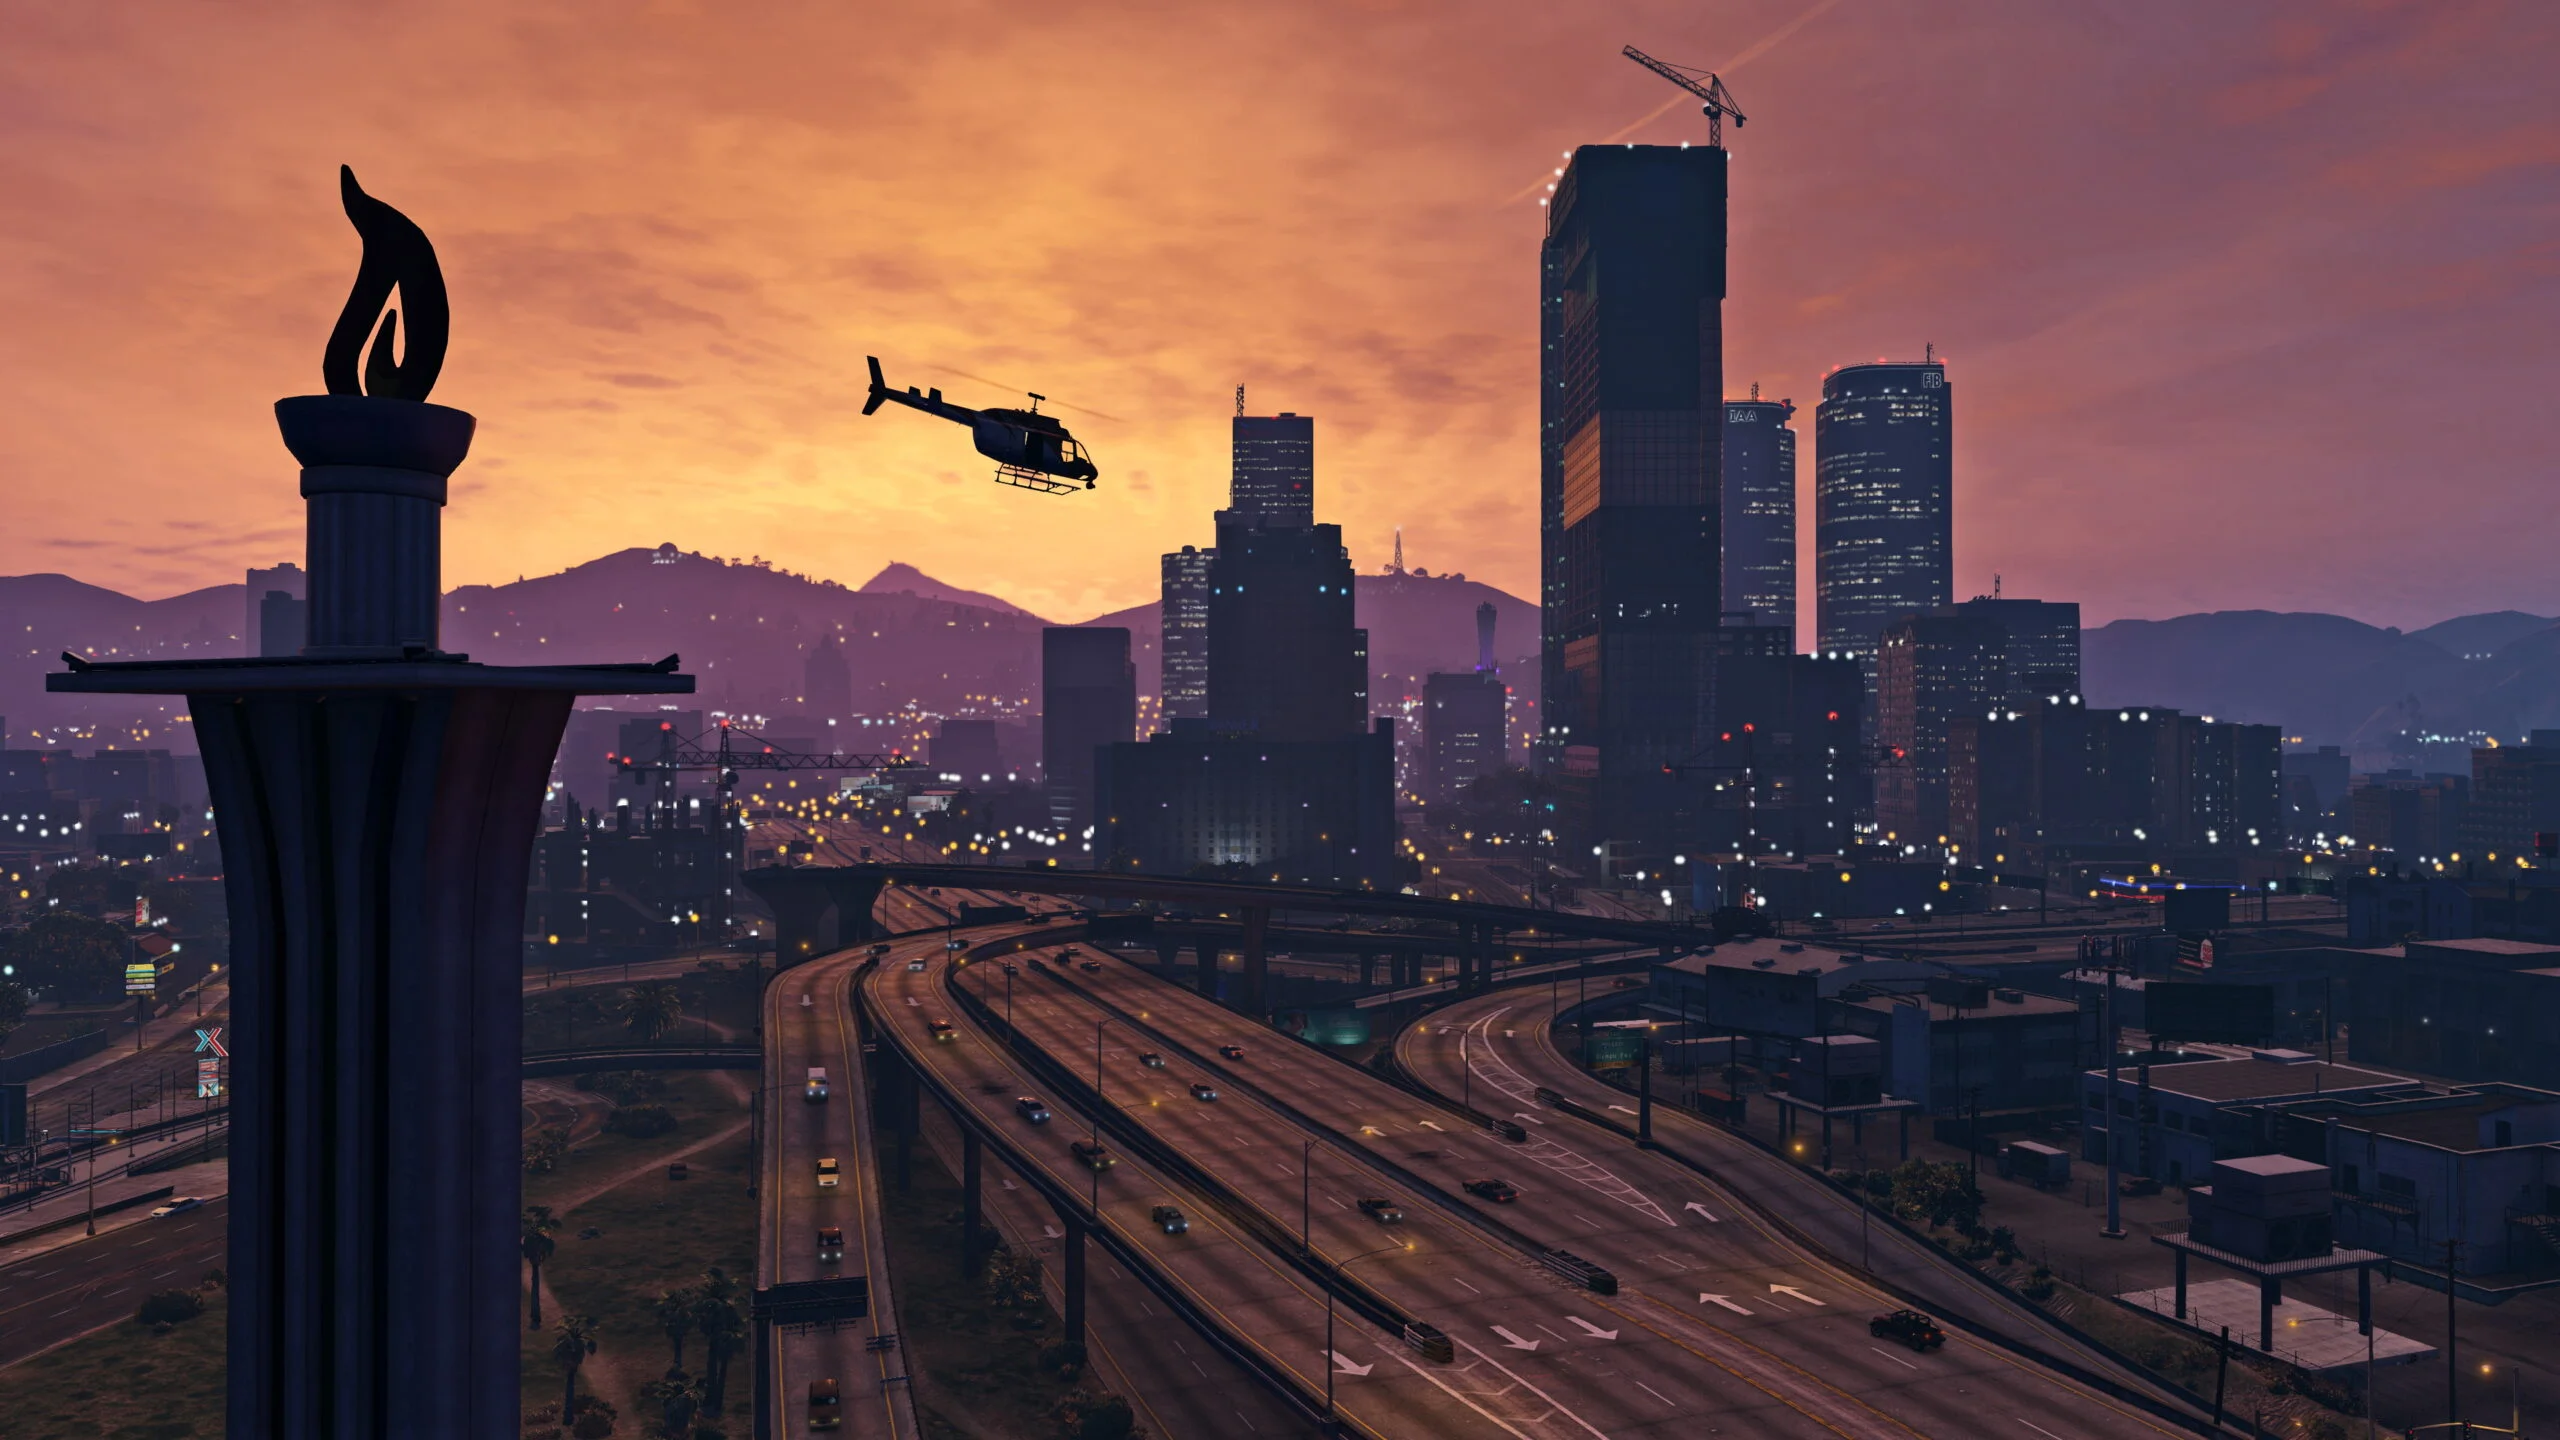 Grand Theft Auto V - PlayStation 5 : Take 2 Interactive  